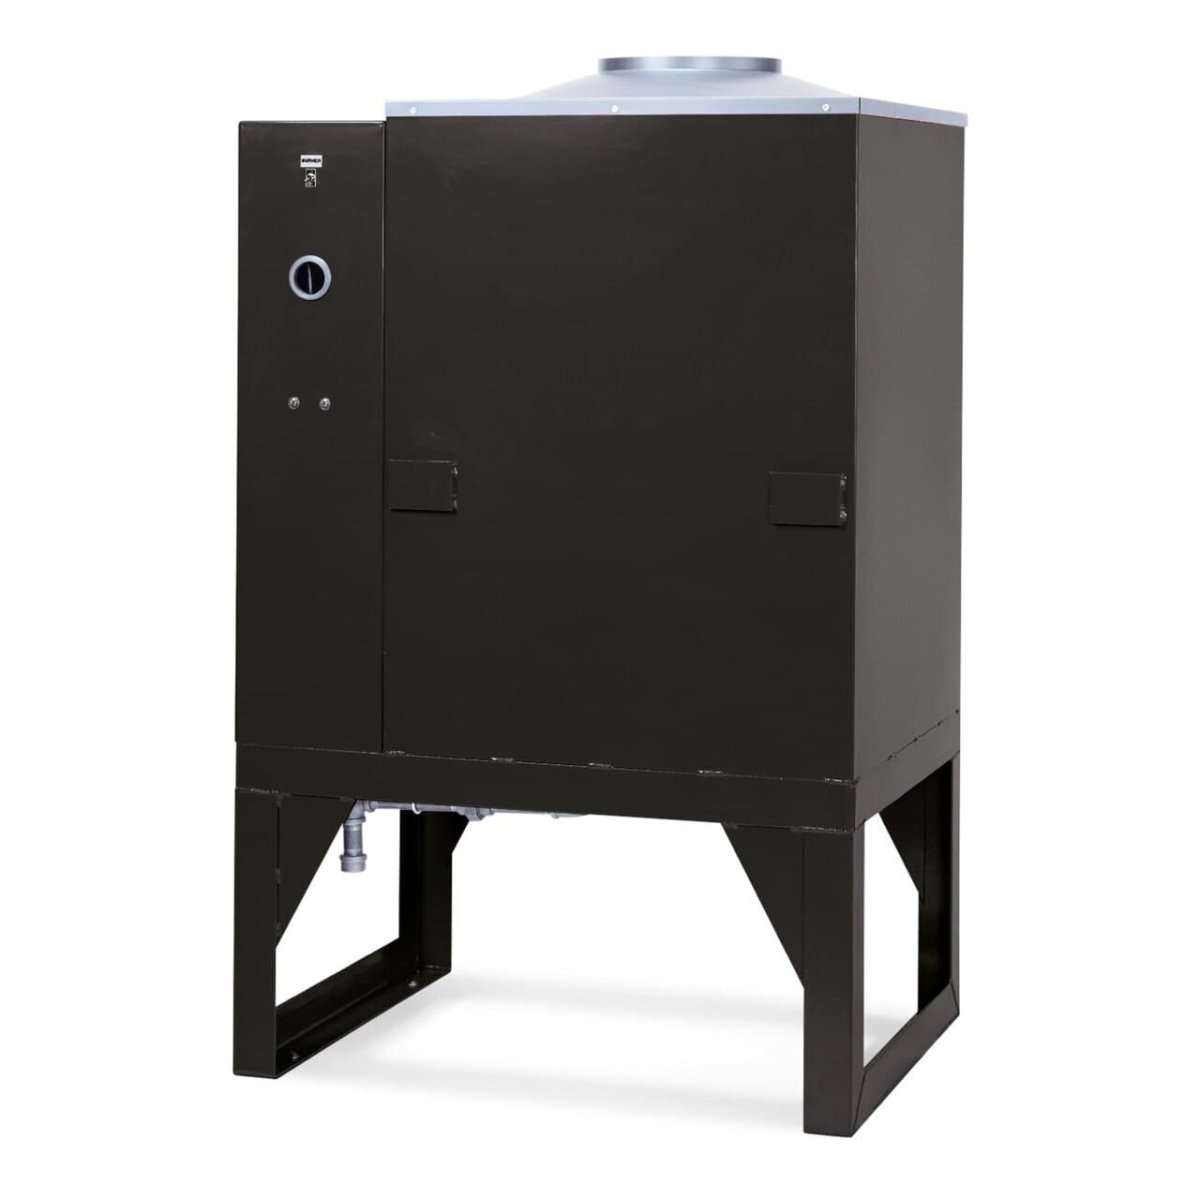 Hot Water Generator 9400 Series - Karcher